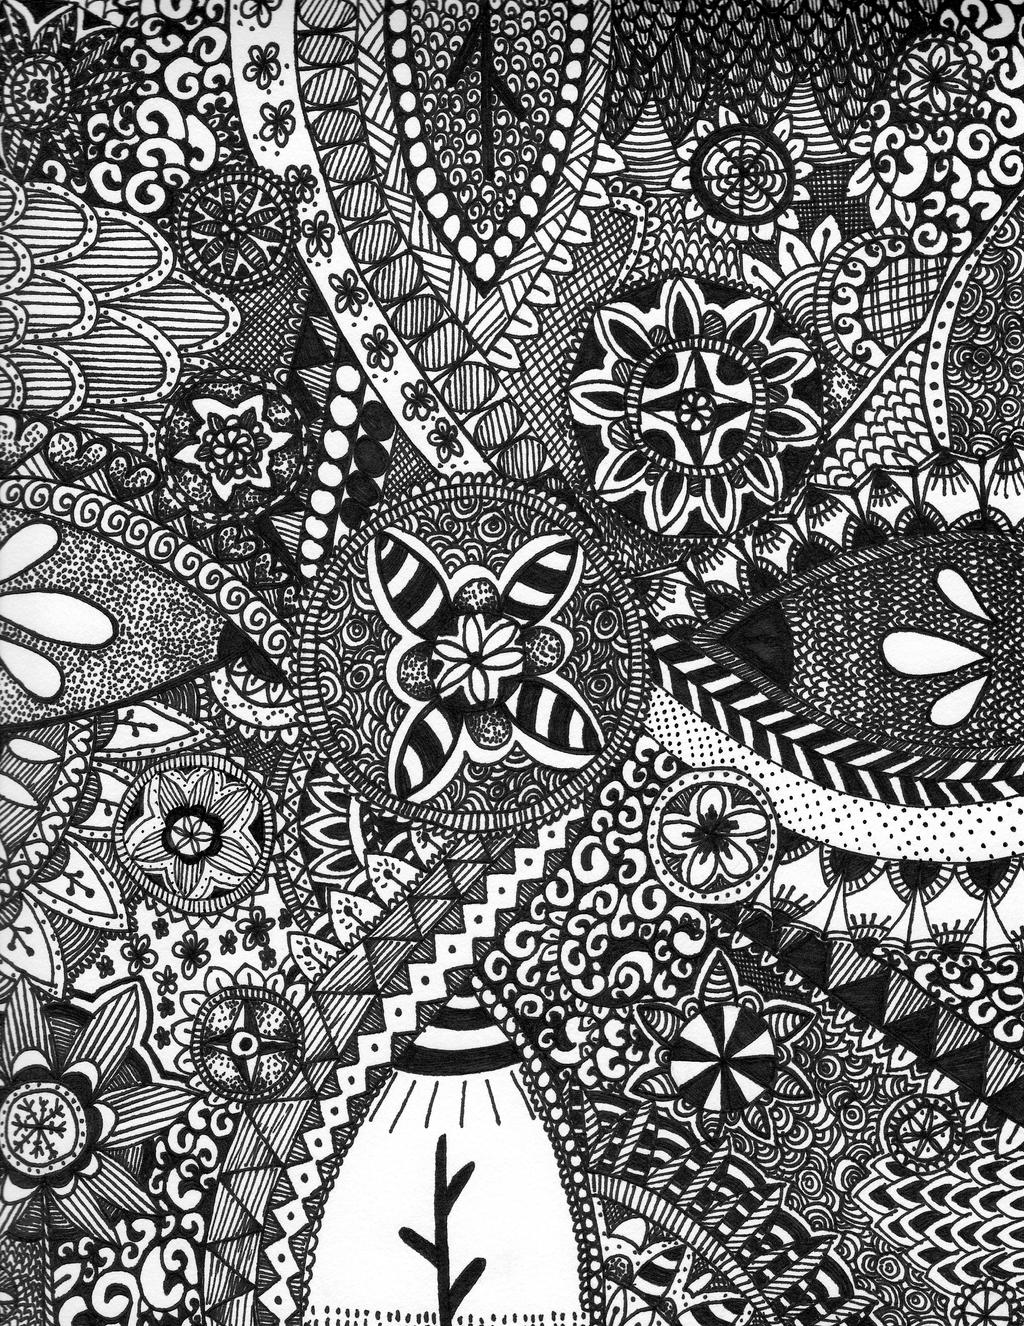 Black and white zen doodle 2 by DeerBaby on DeviantArt